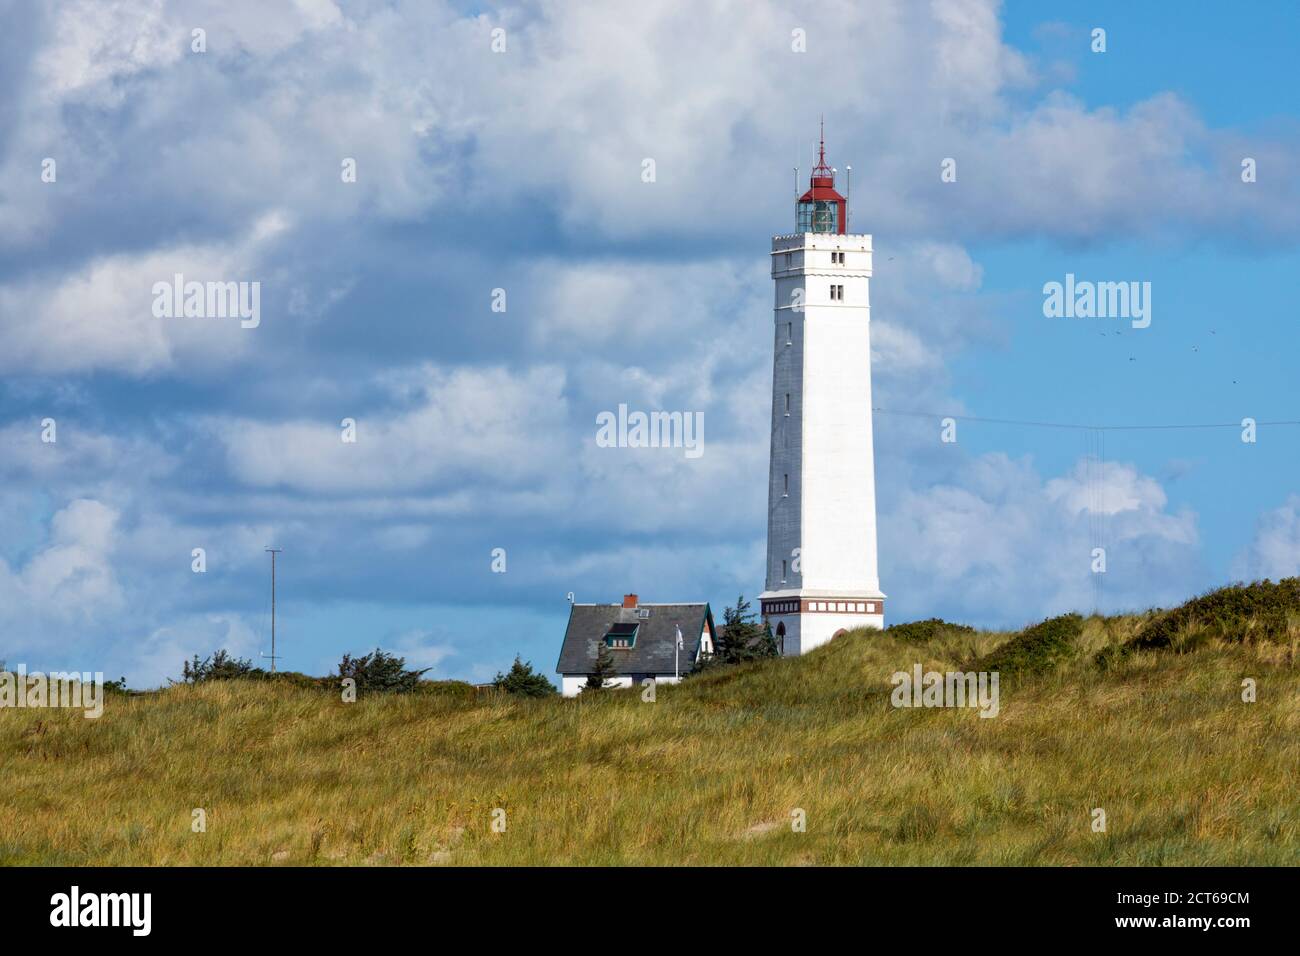 Coastal landscape with dunes and lighthouse at Blåvand, Jutland, Denmark Stock Photo